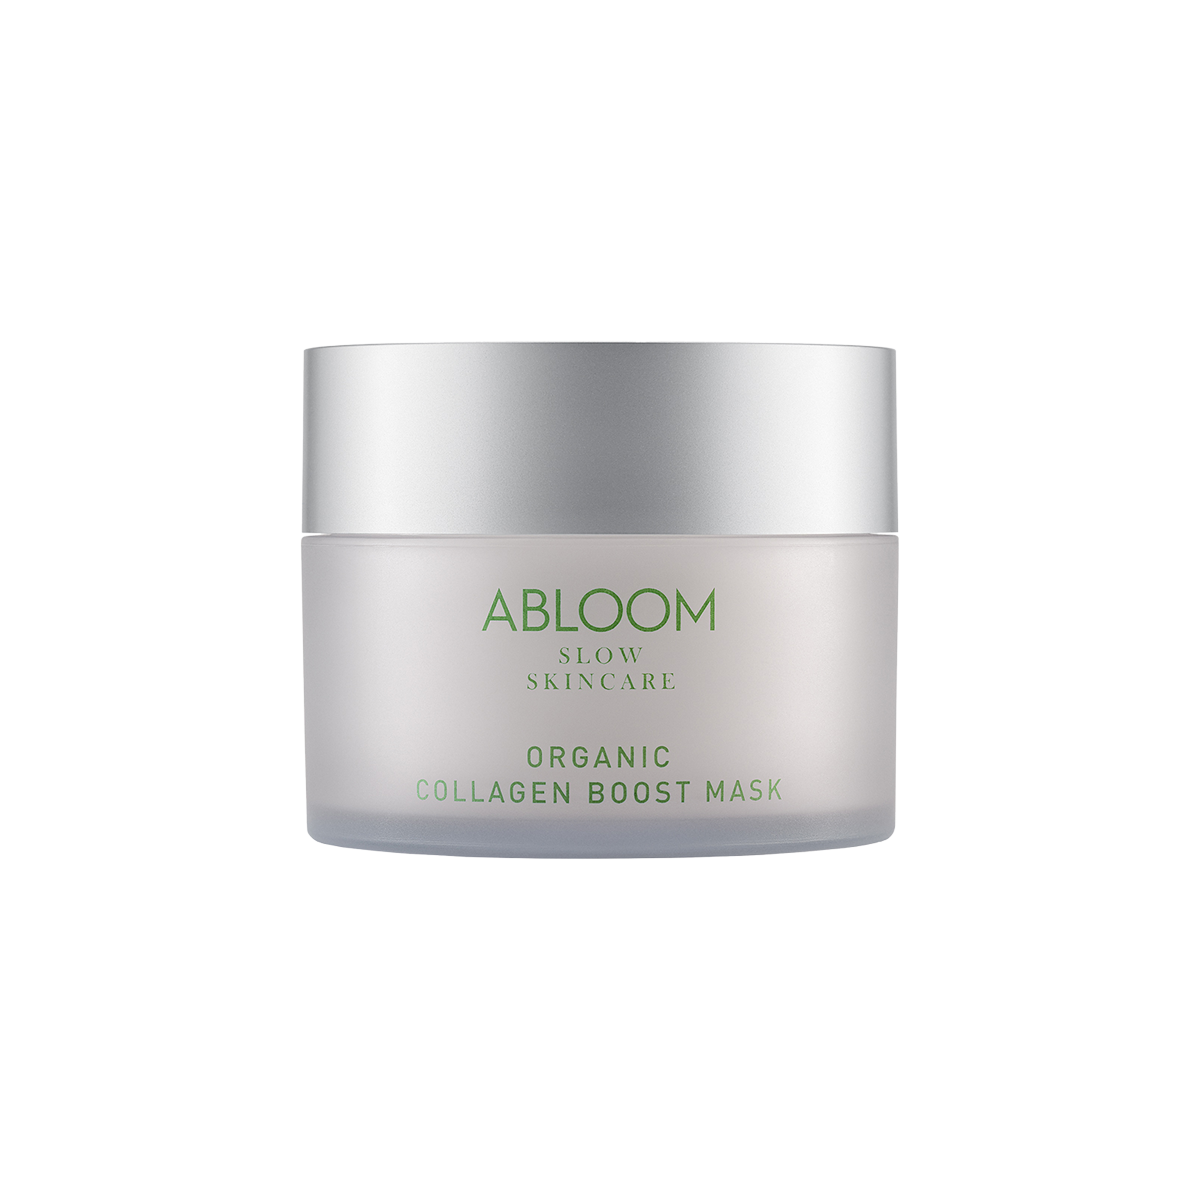 ABLOOM - Organic Collagen Boost Mask